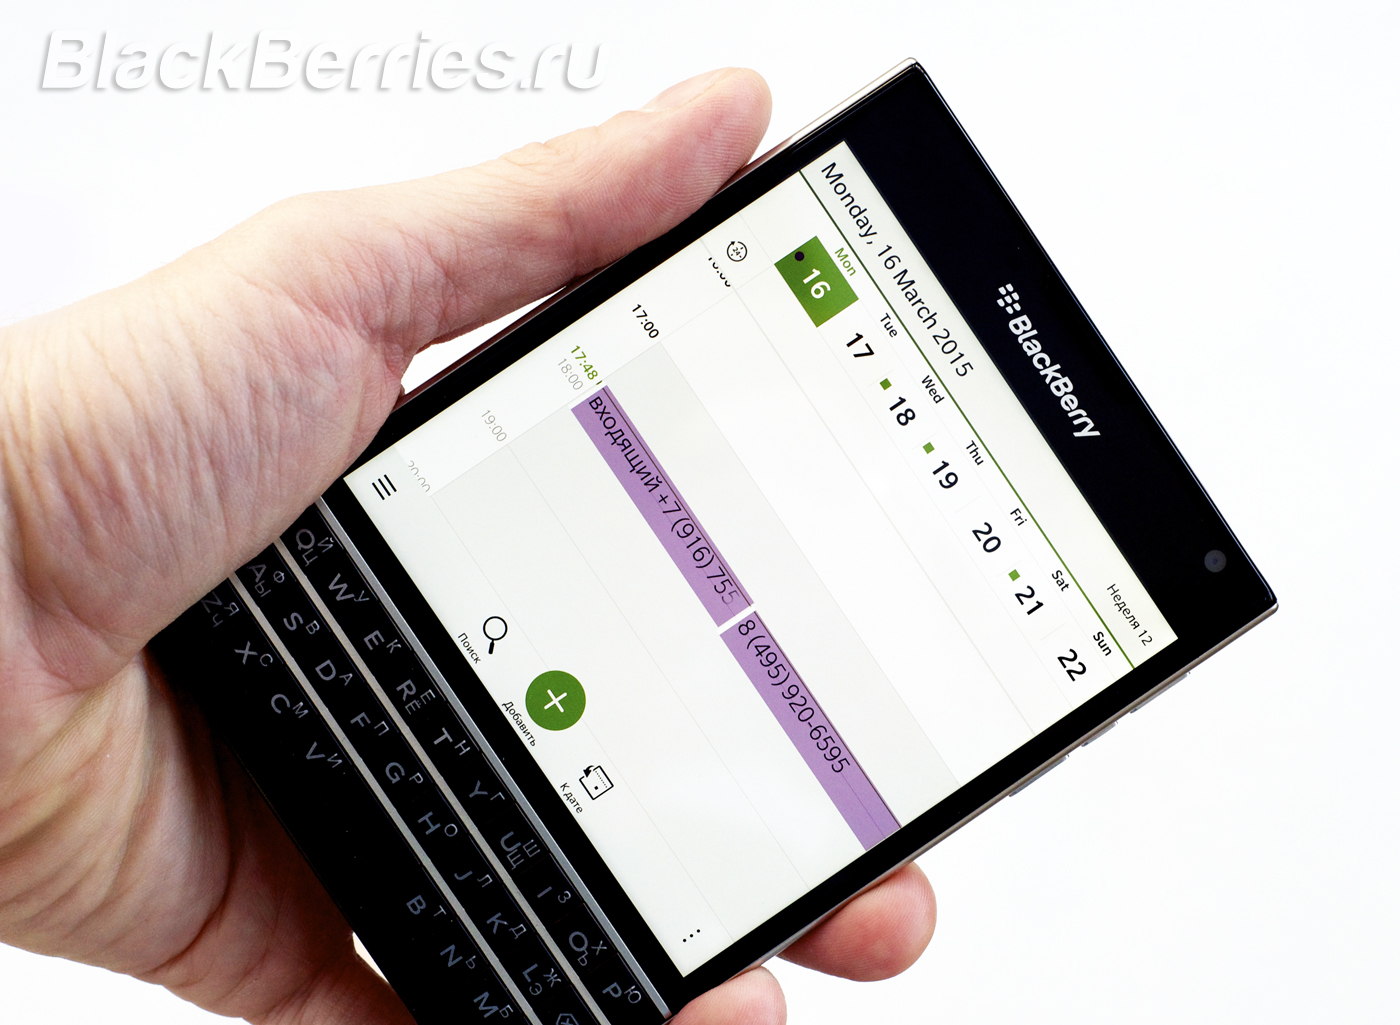 BlackBerry-Passport-CallNotes